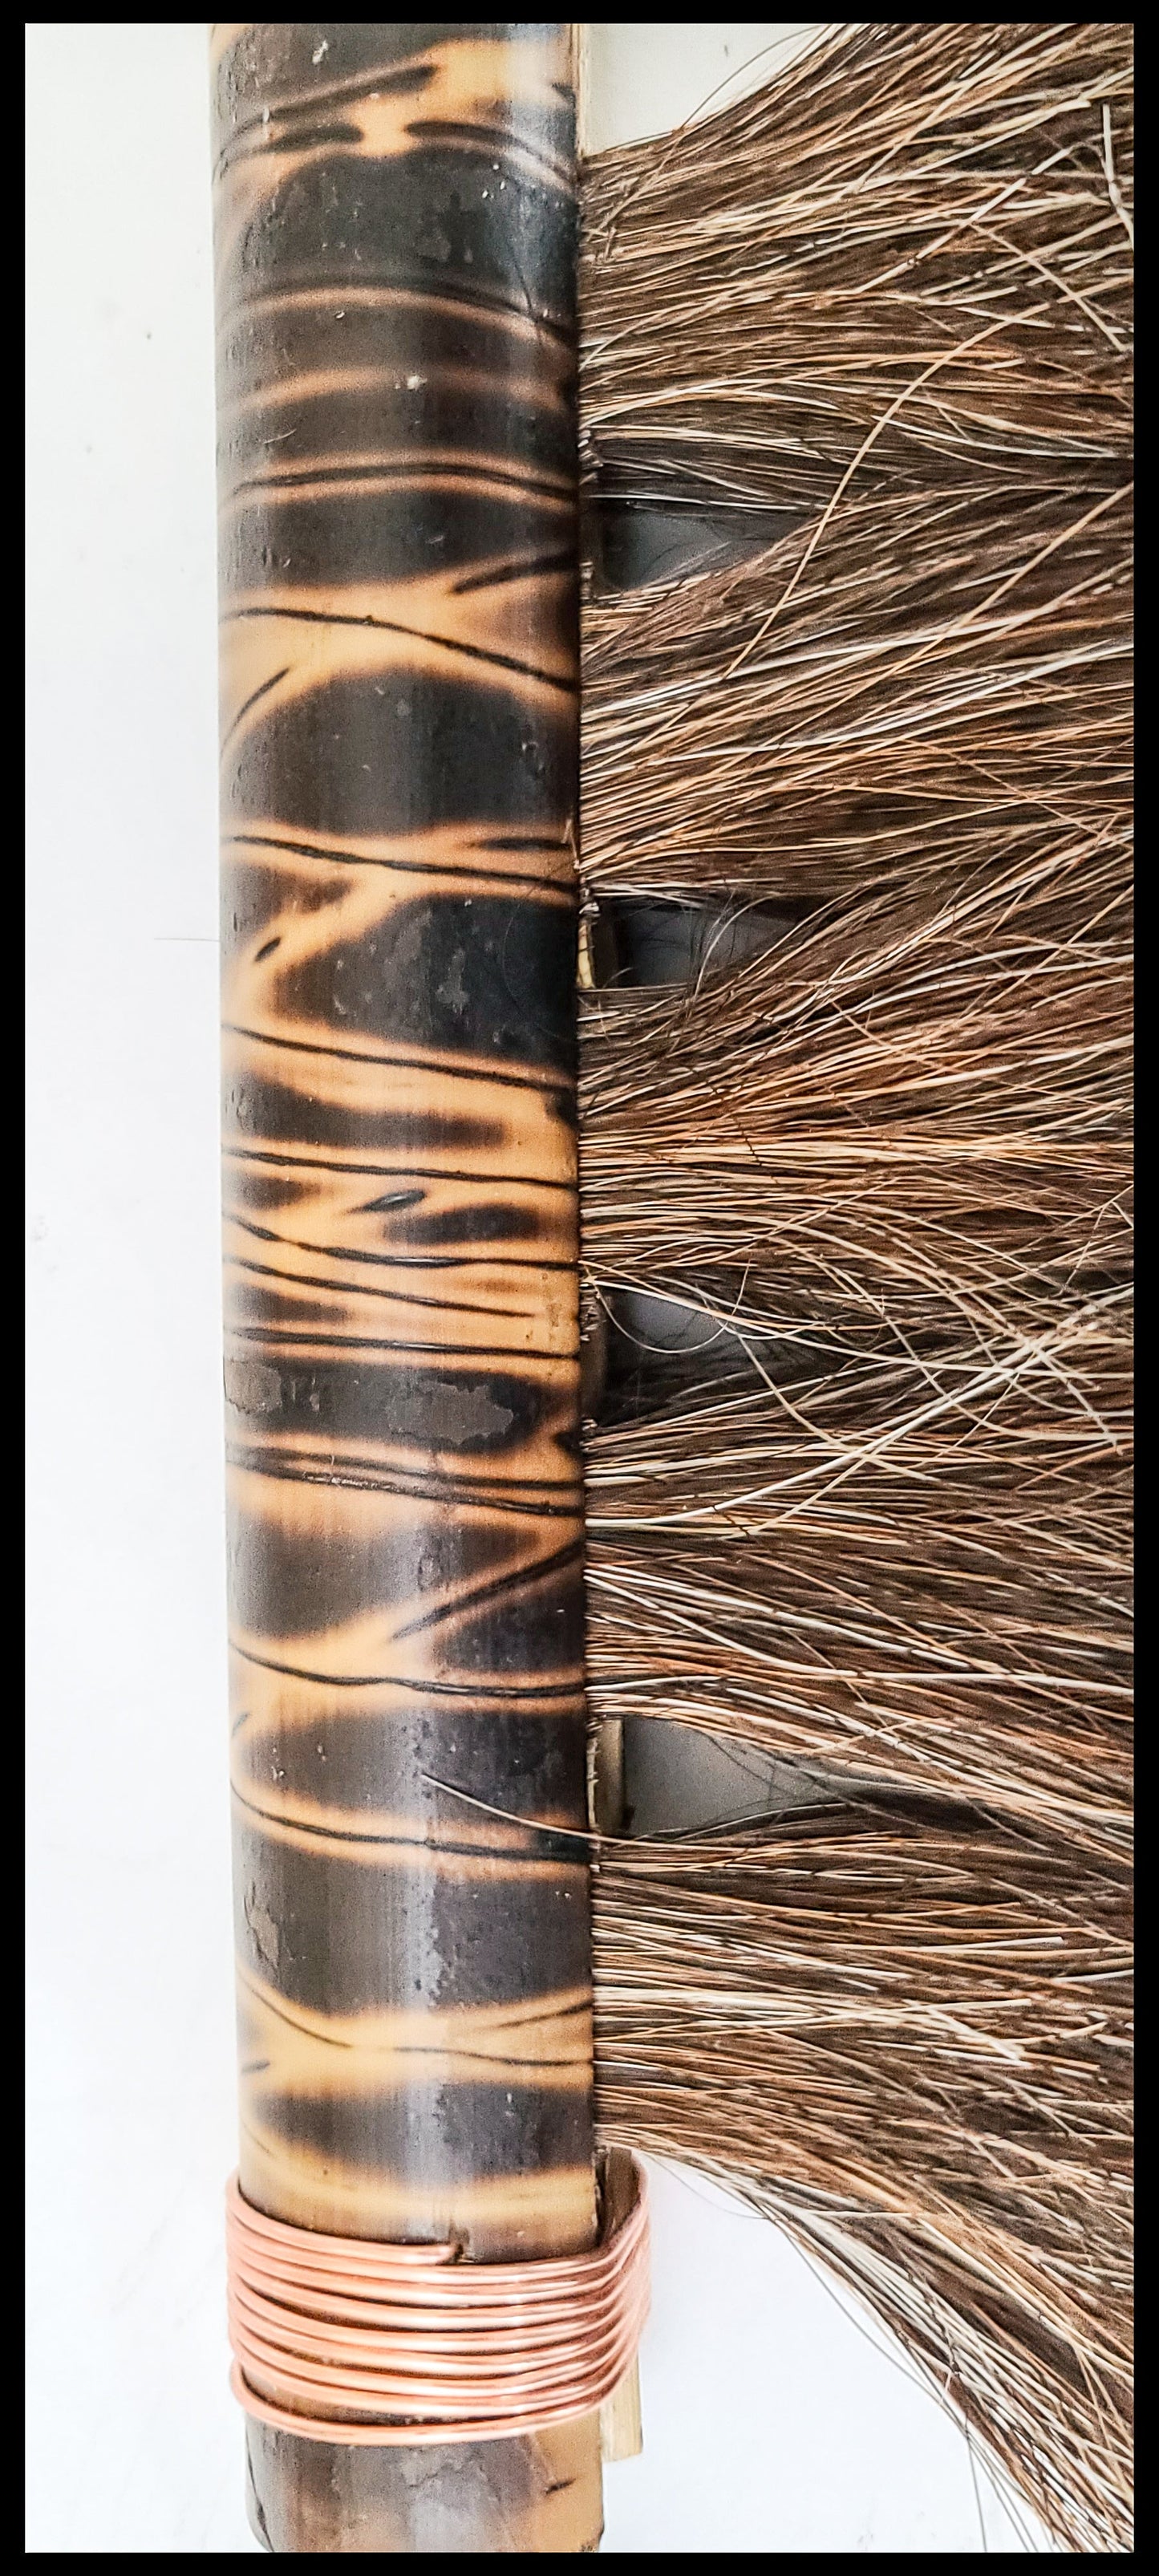 Wide Horsehair Paintbrush with Bamboo Handle WSB #103 Art Supplies Elizabeth Schowachert Art